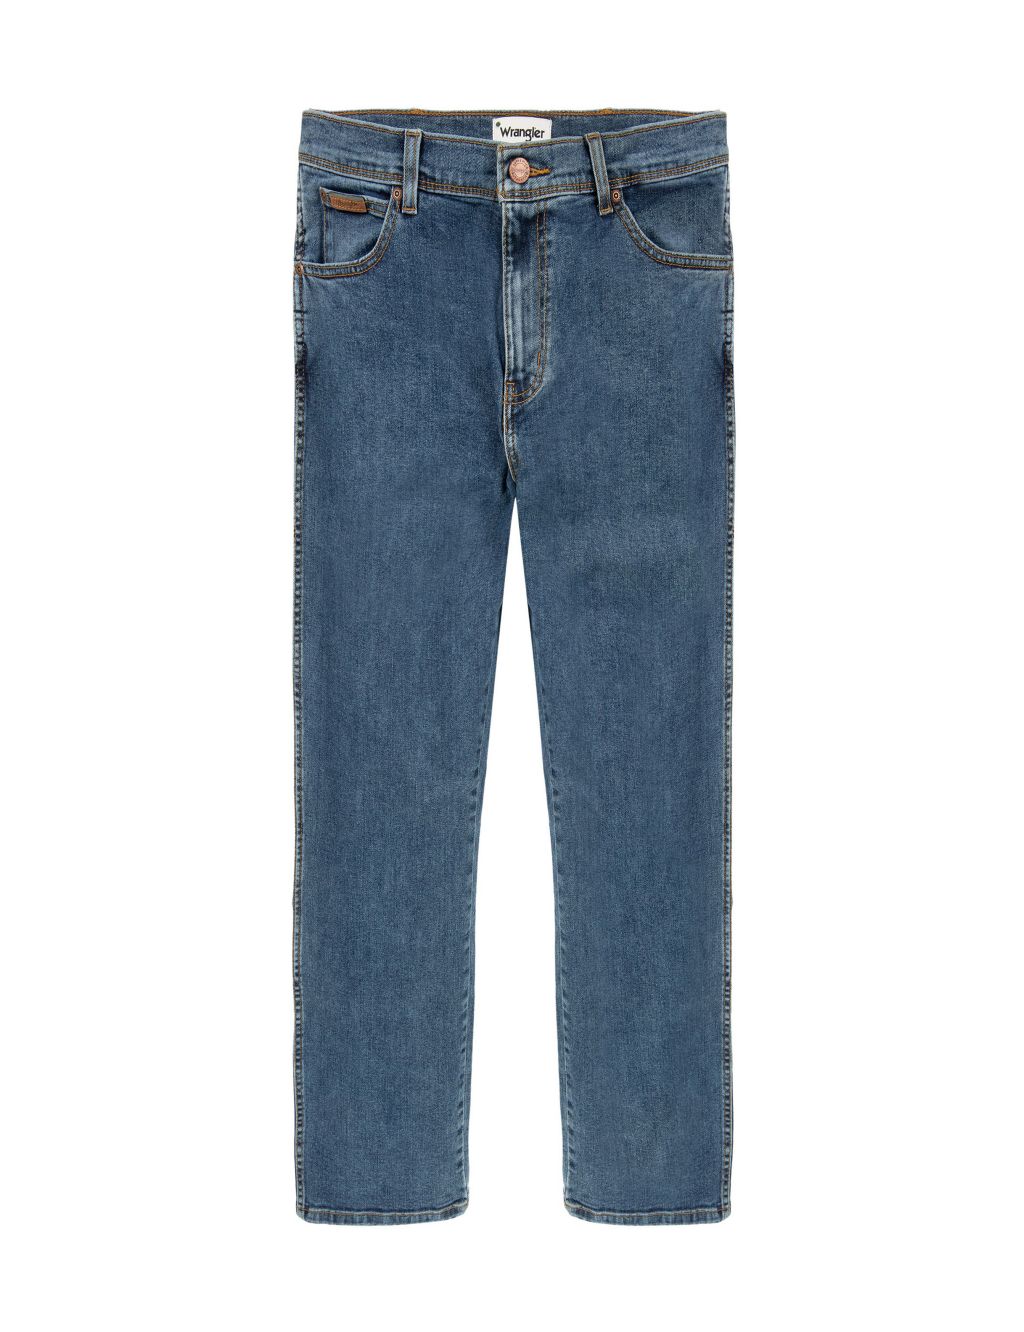 Texas Slim Fit 5 Pocket Jeans image 2